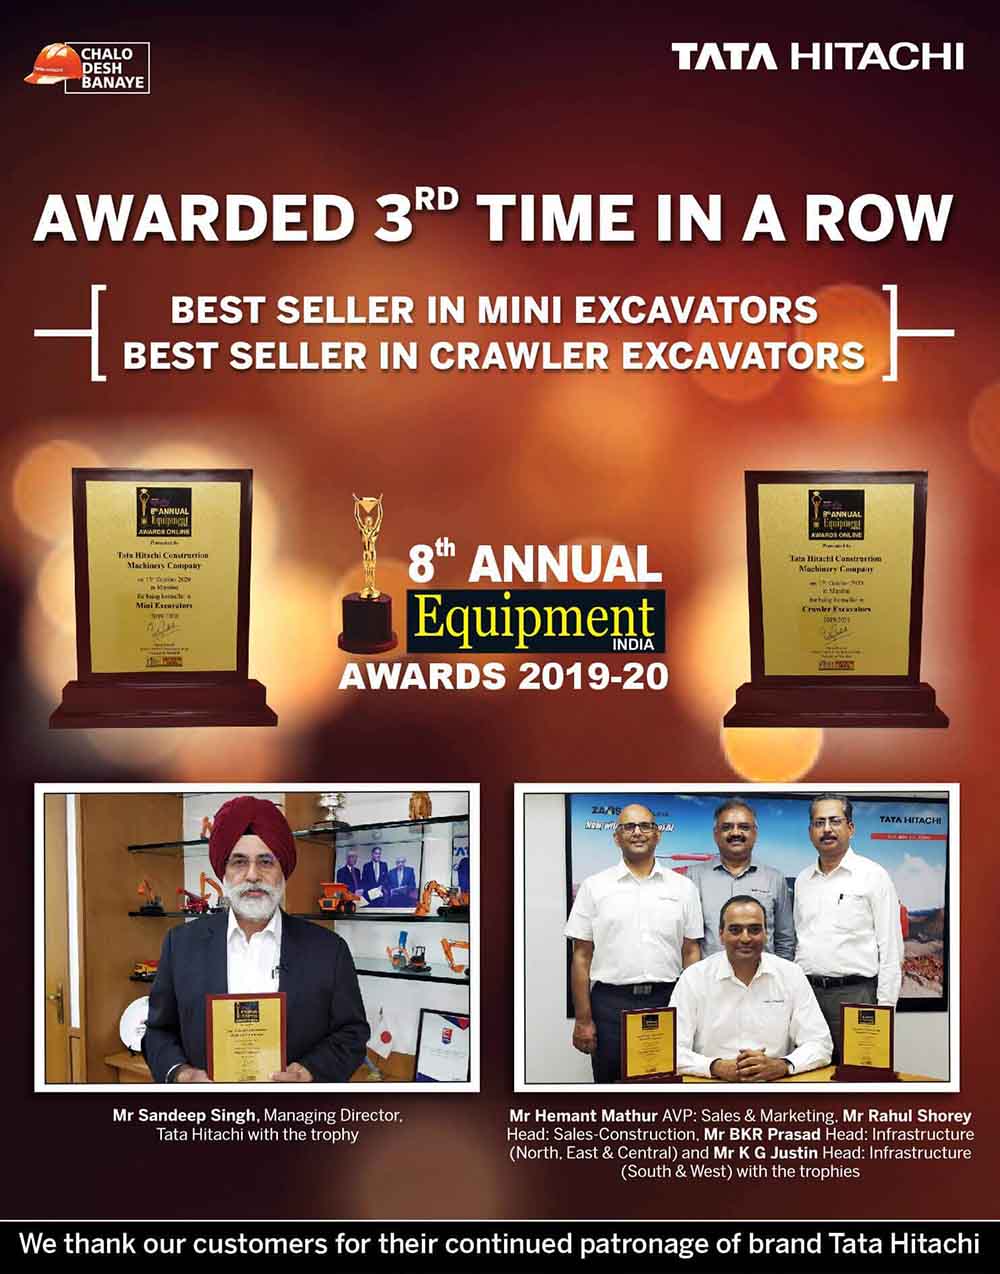 Bestseller Award for Crawler and Mini Excavators